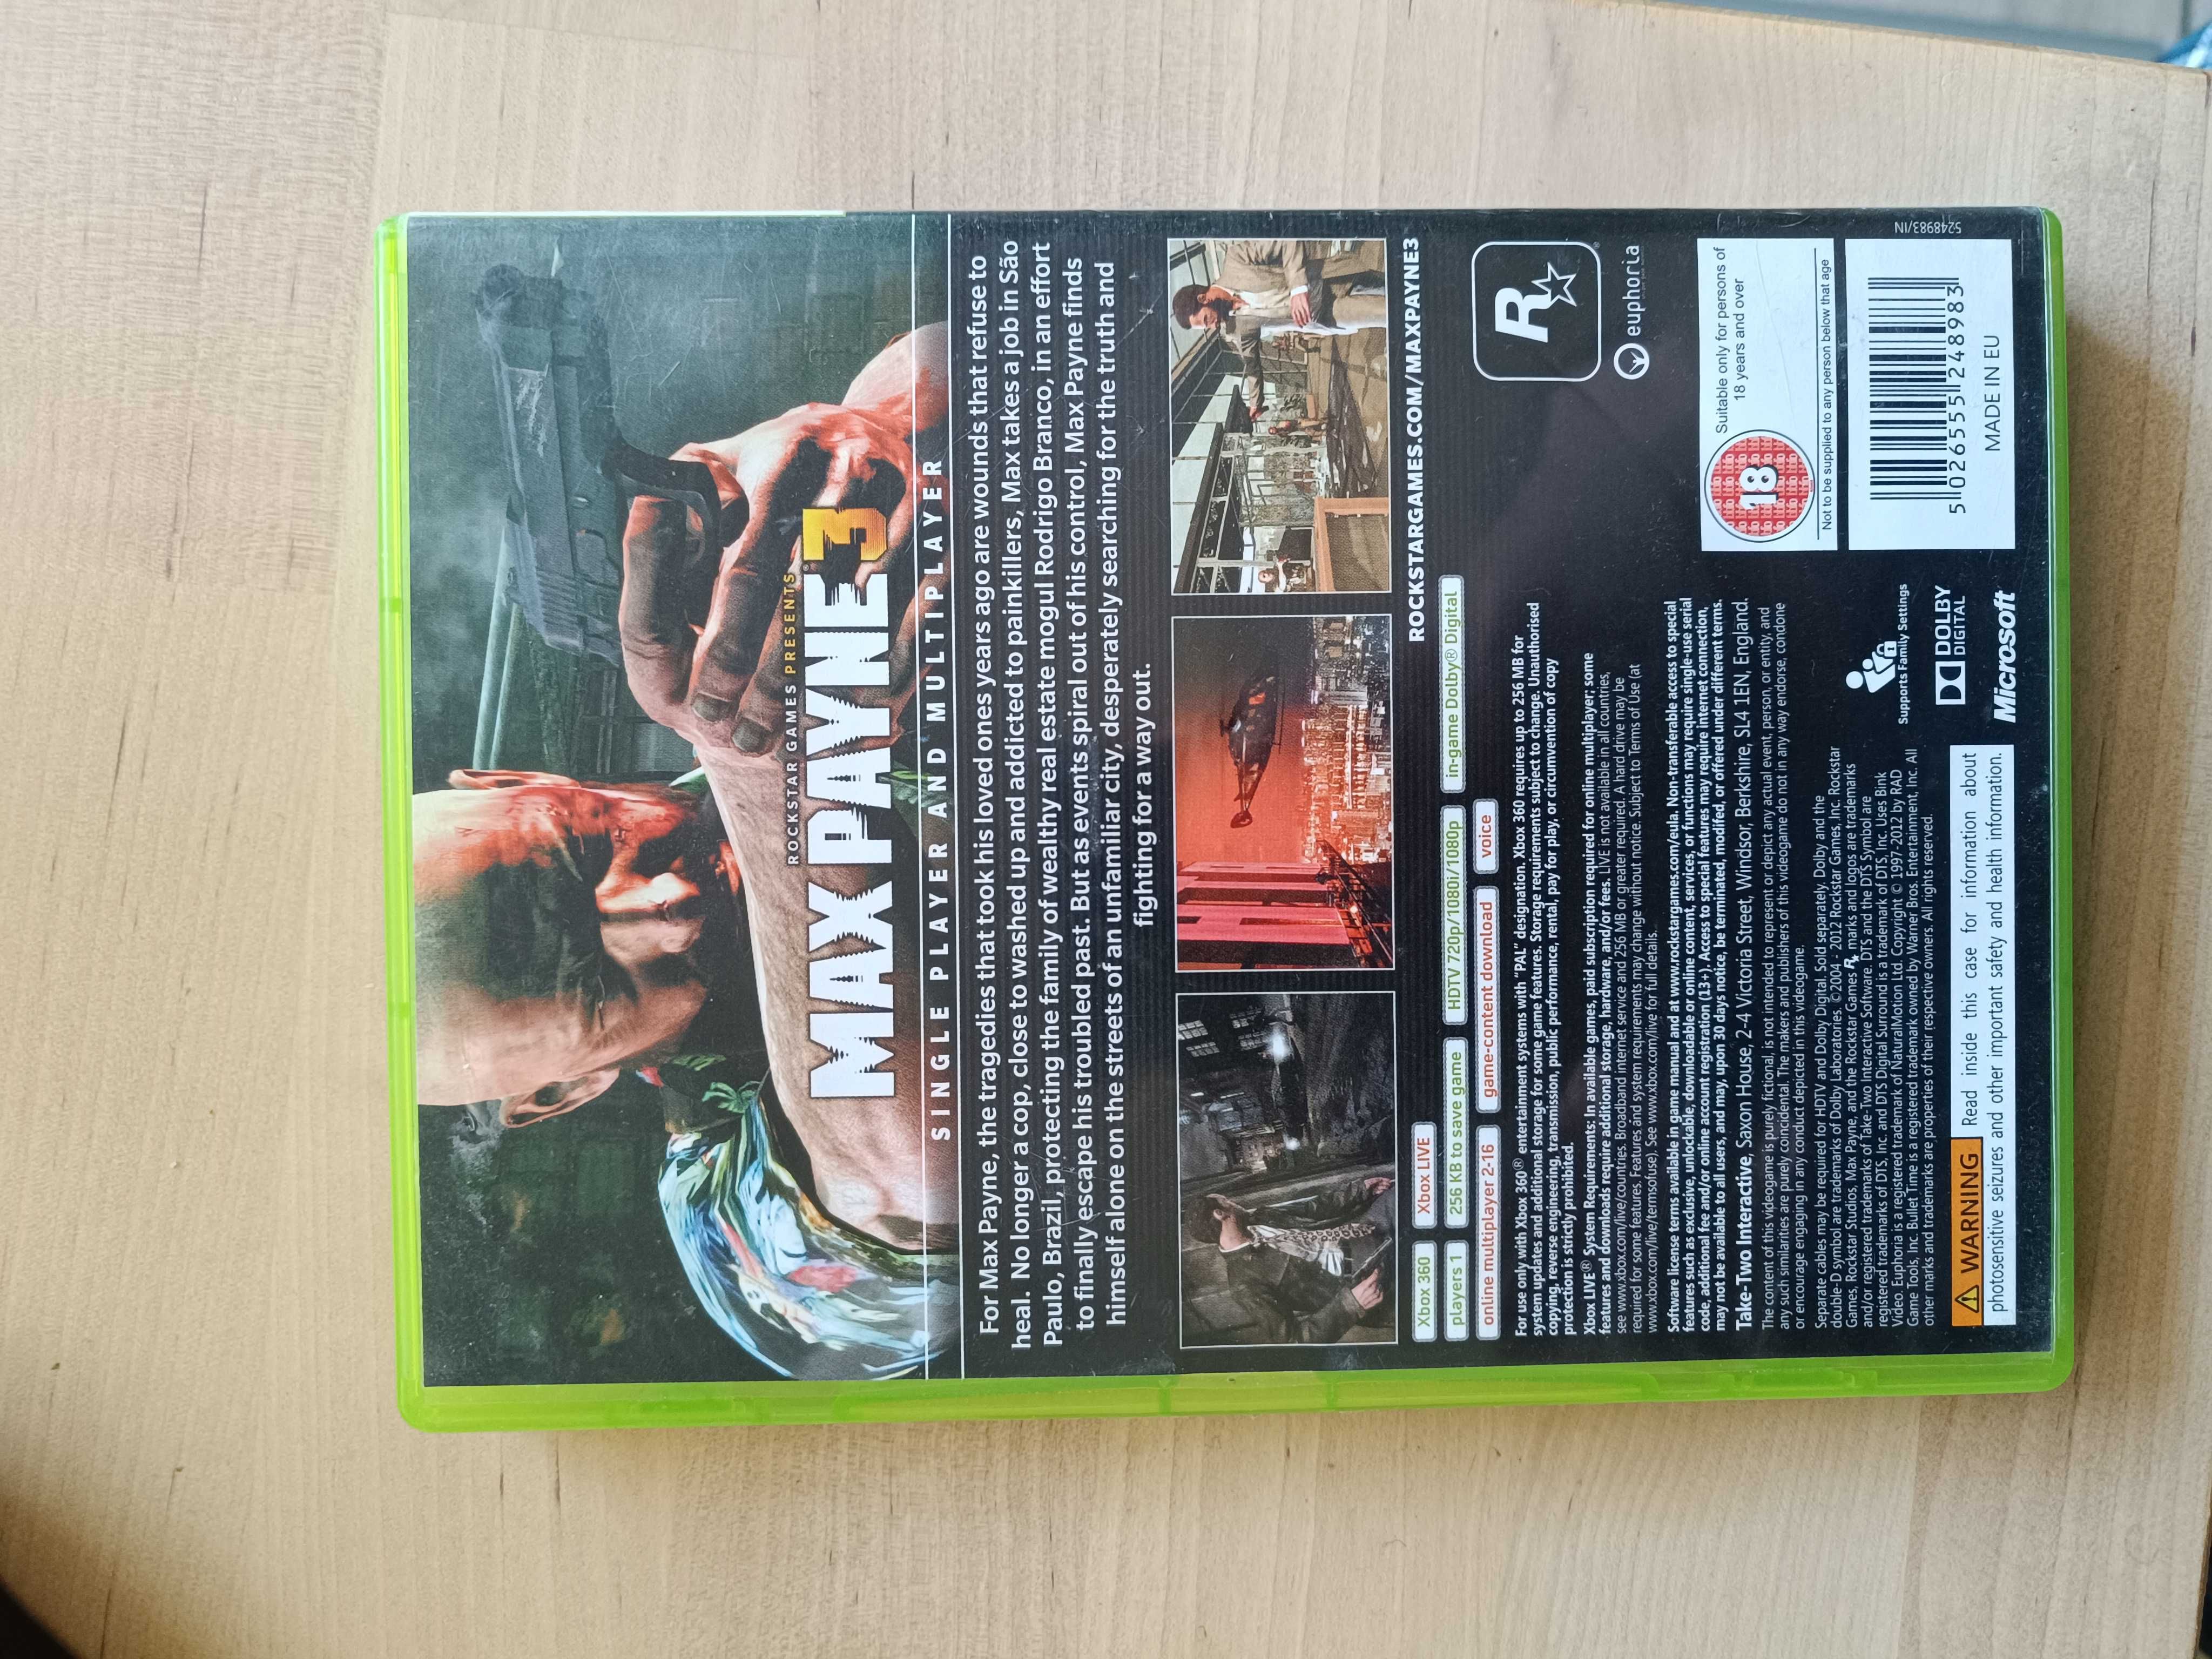 Max Payne 3 (Xbox360)